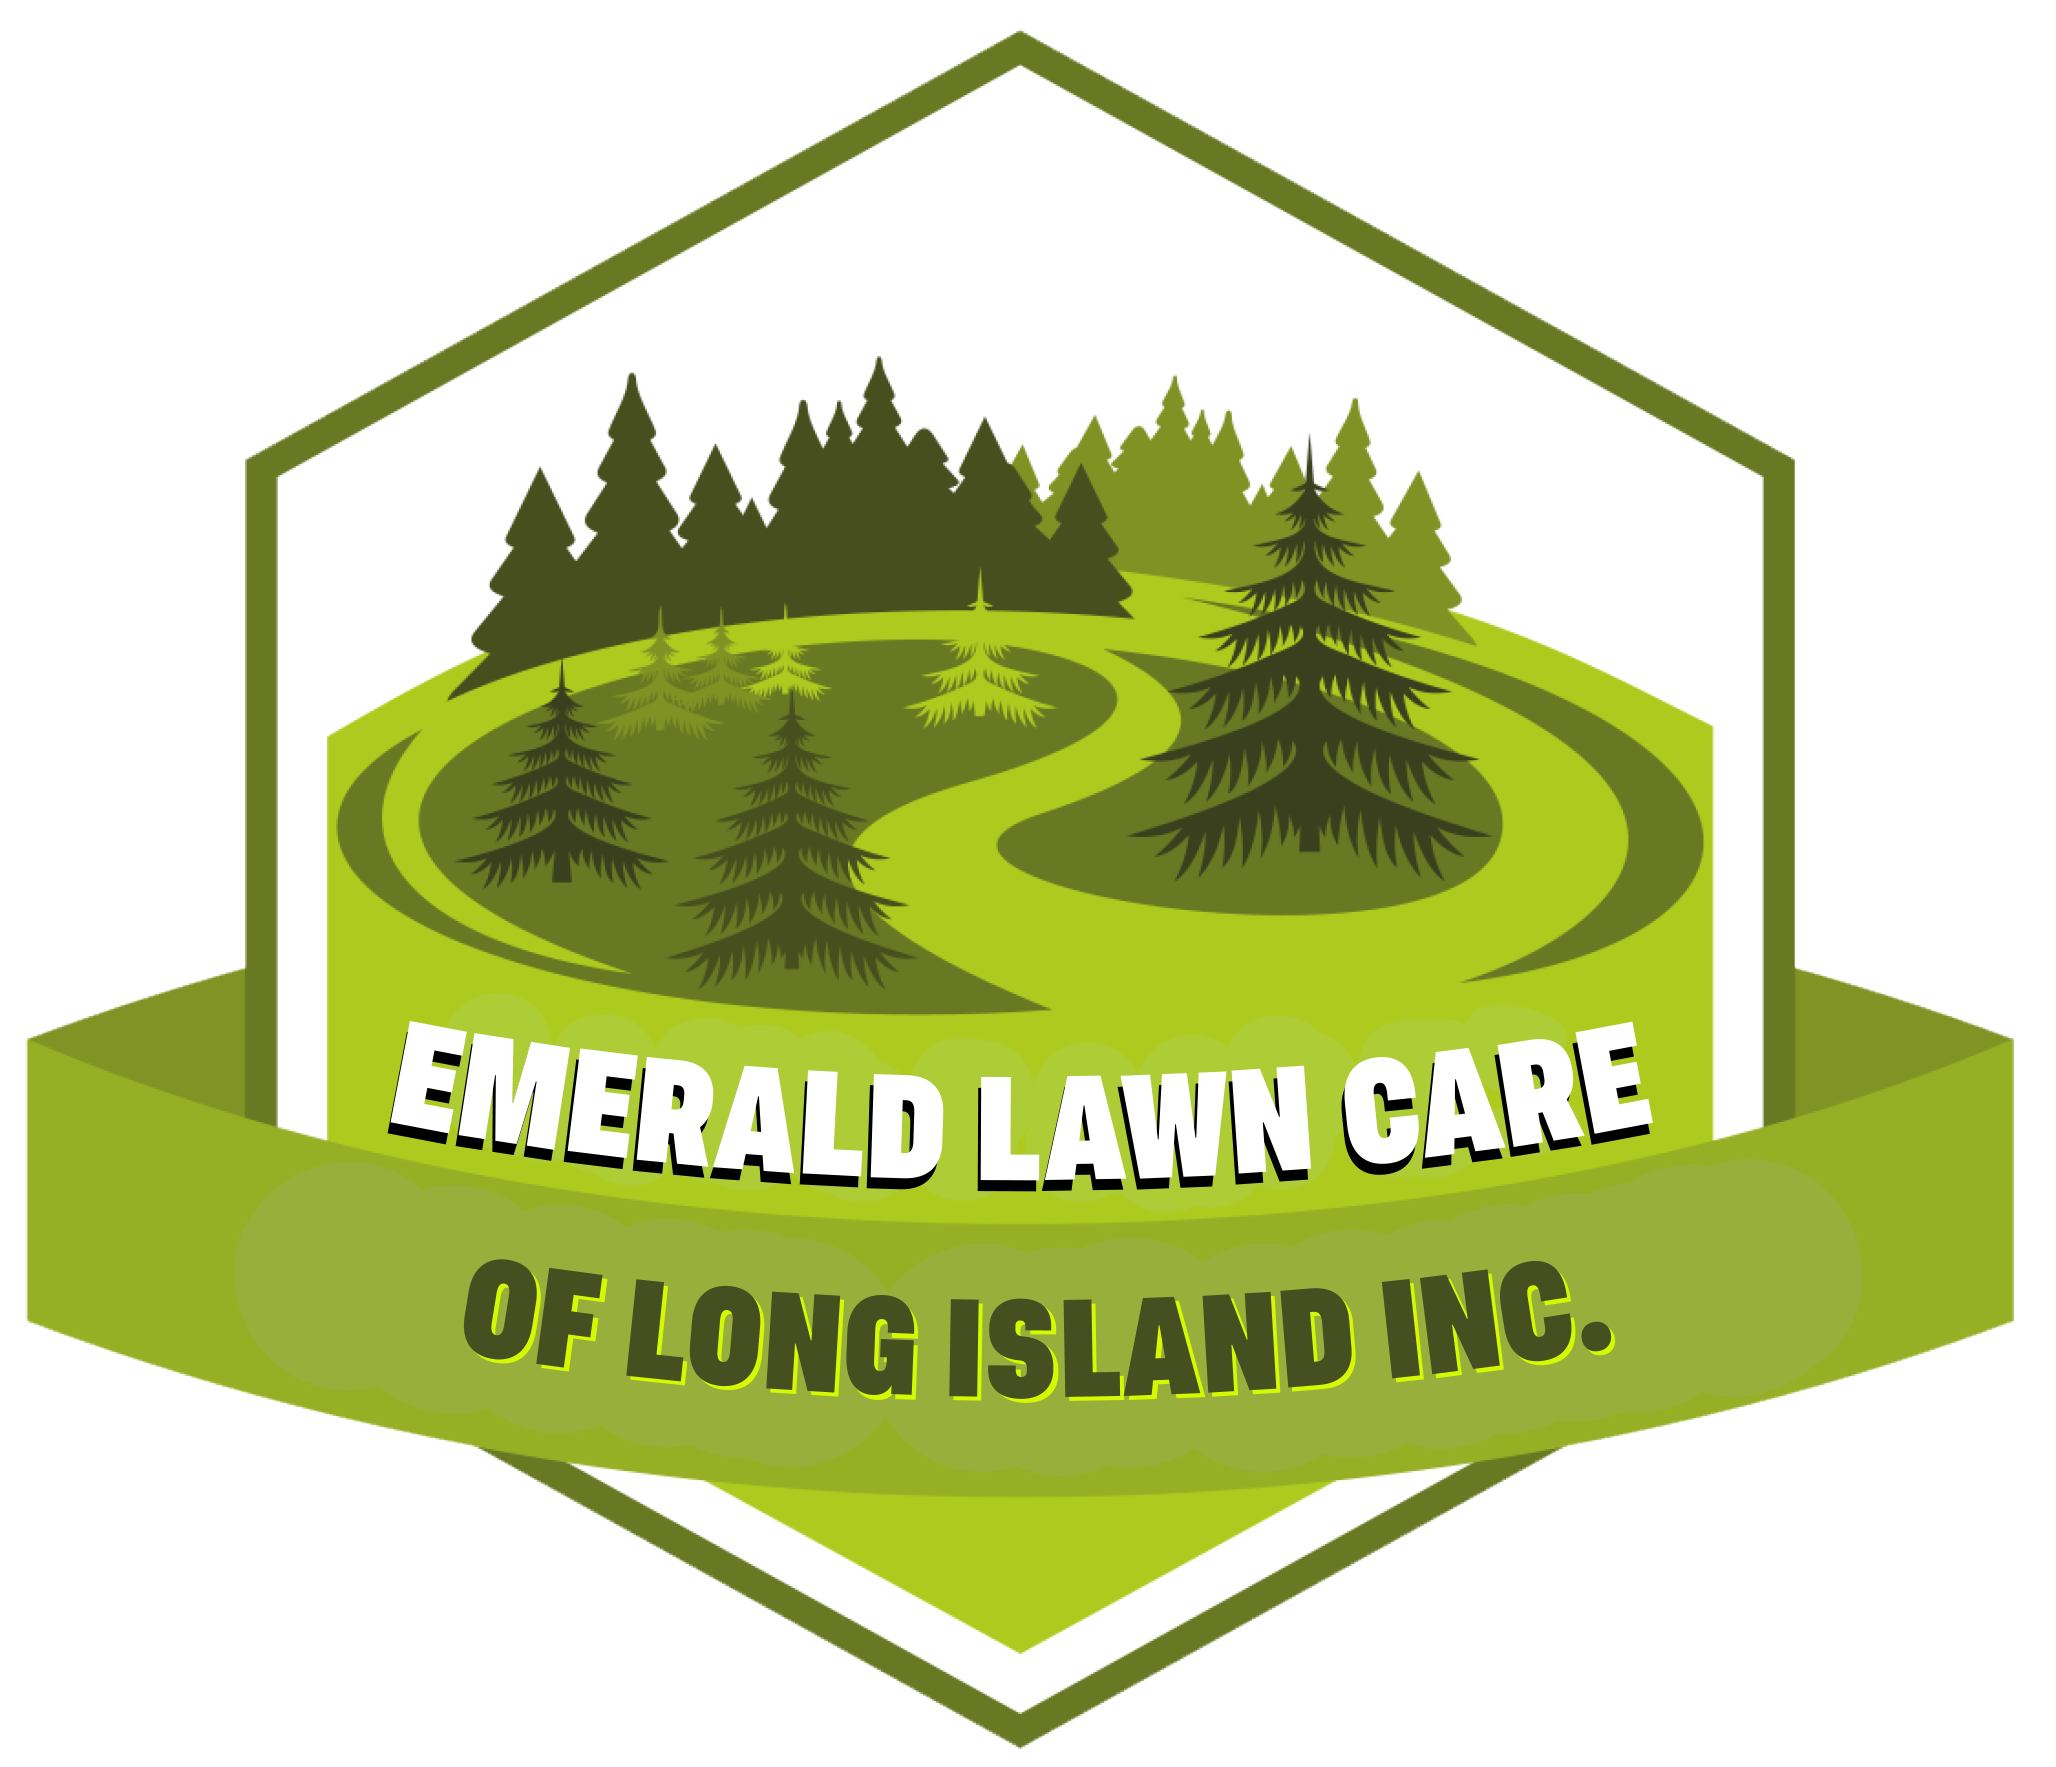 Emerald Lawn Care of Long Island